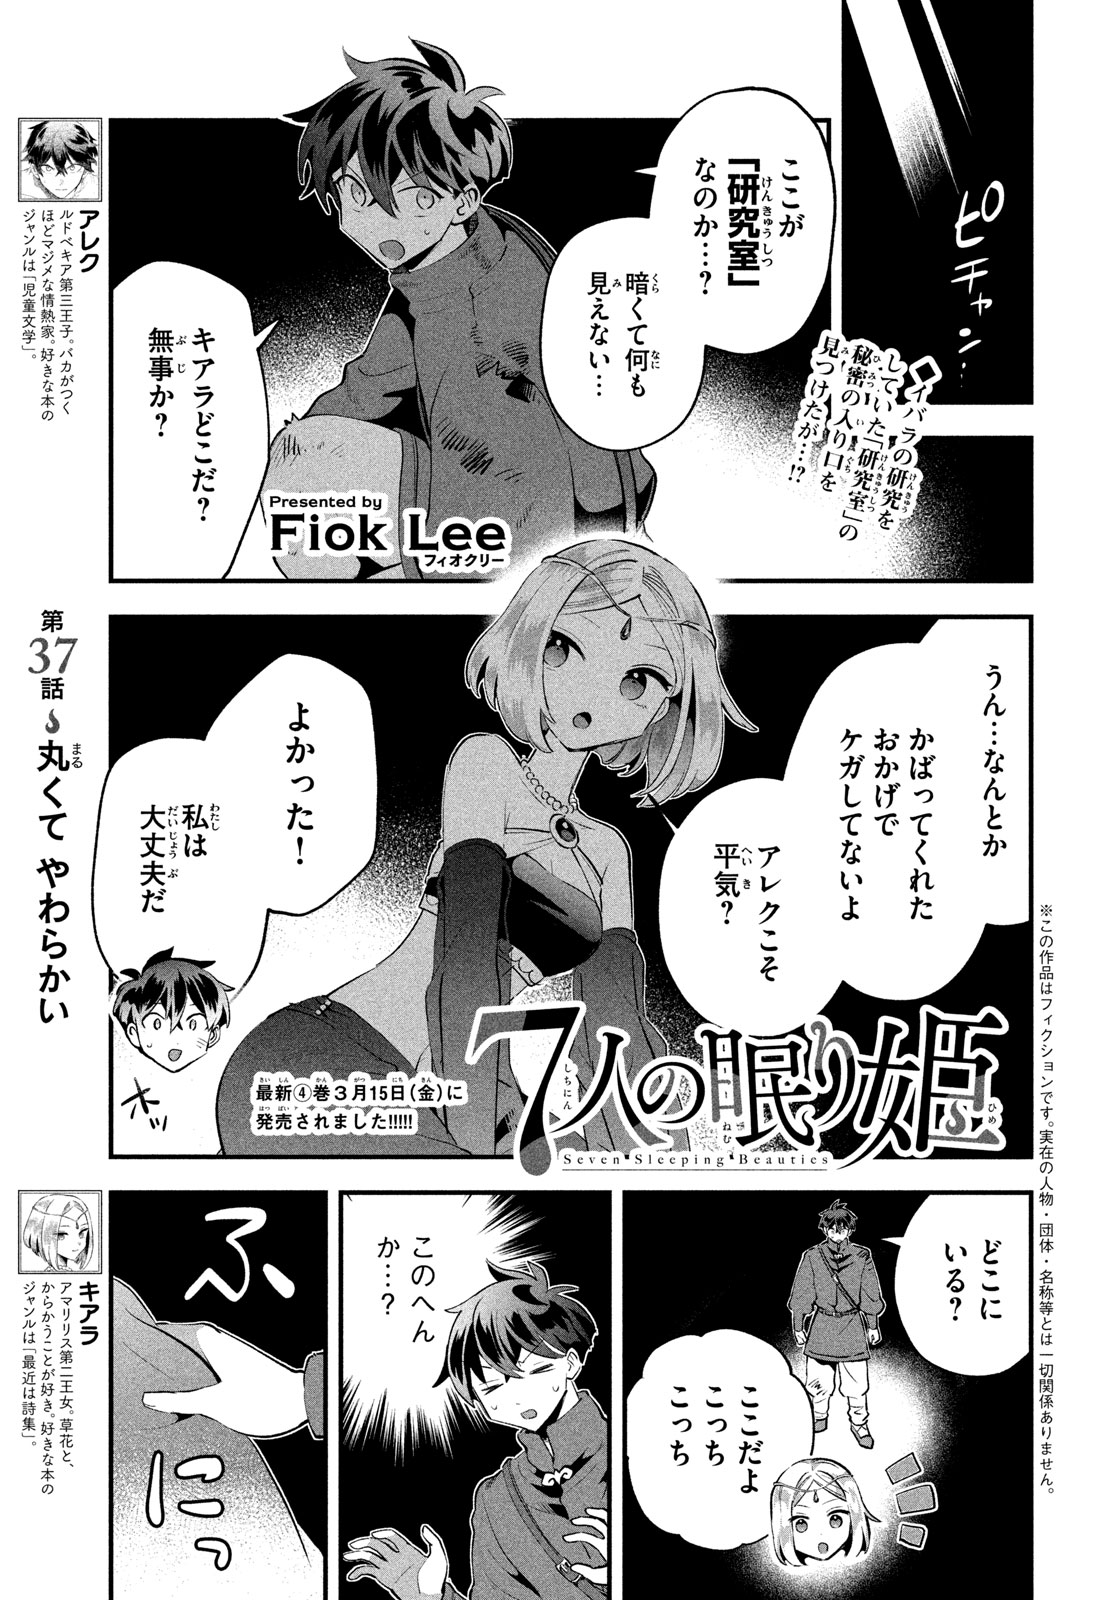 7-nin no Nemuri Hime - Chapter 37 - Page 1